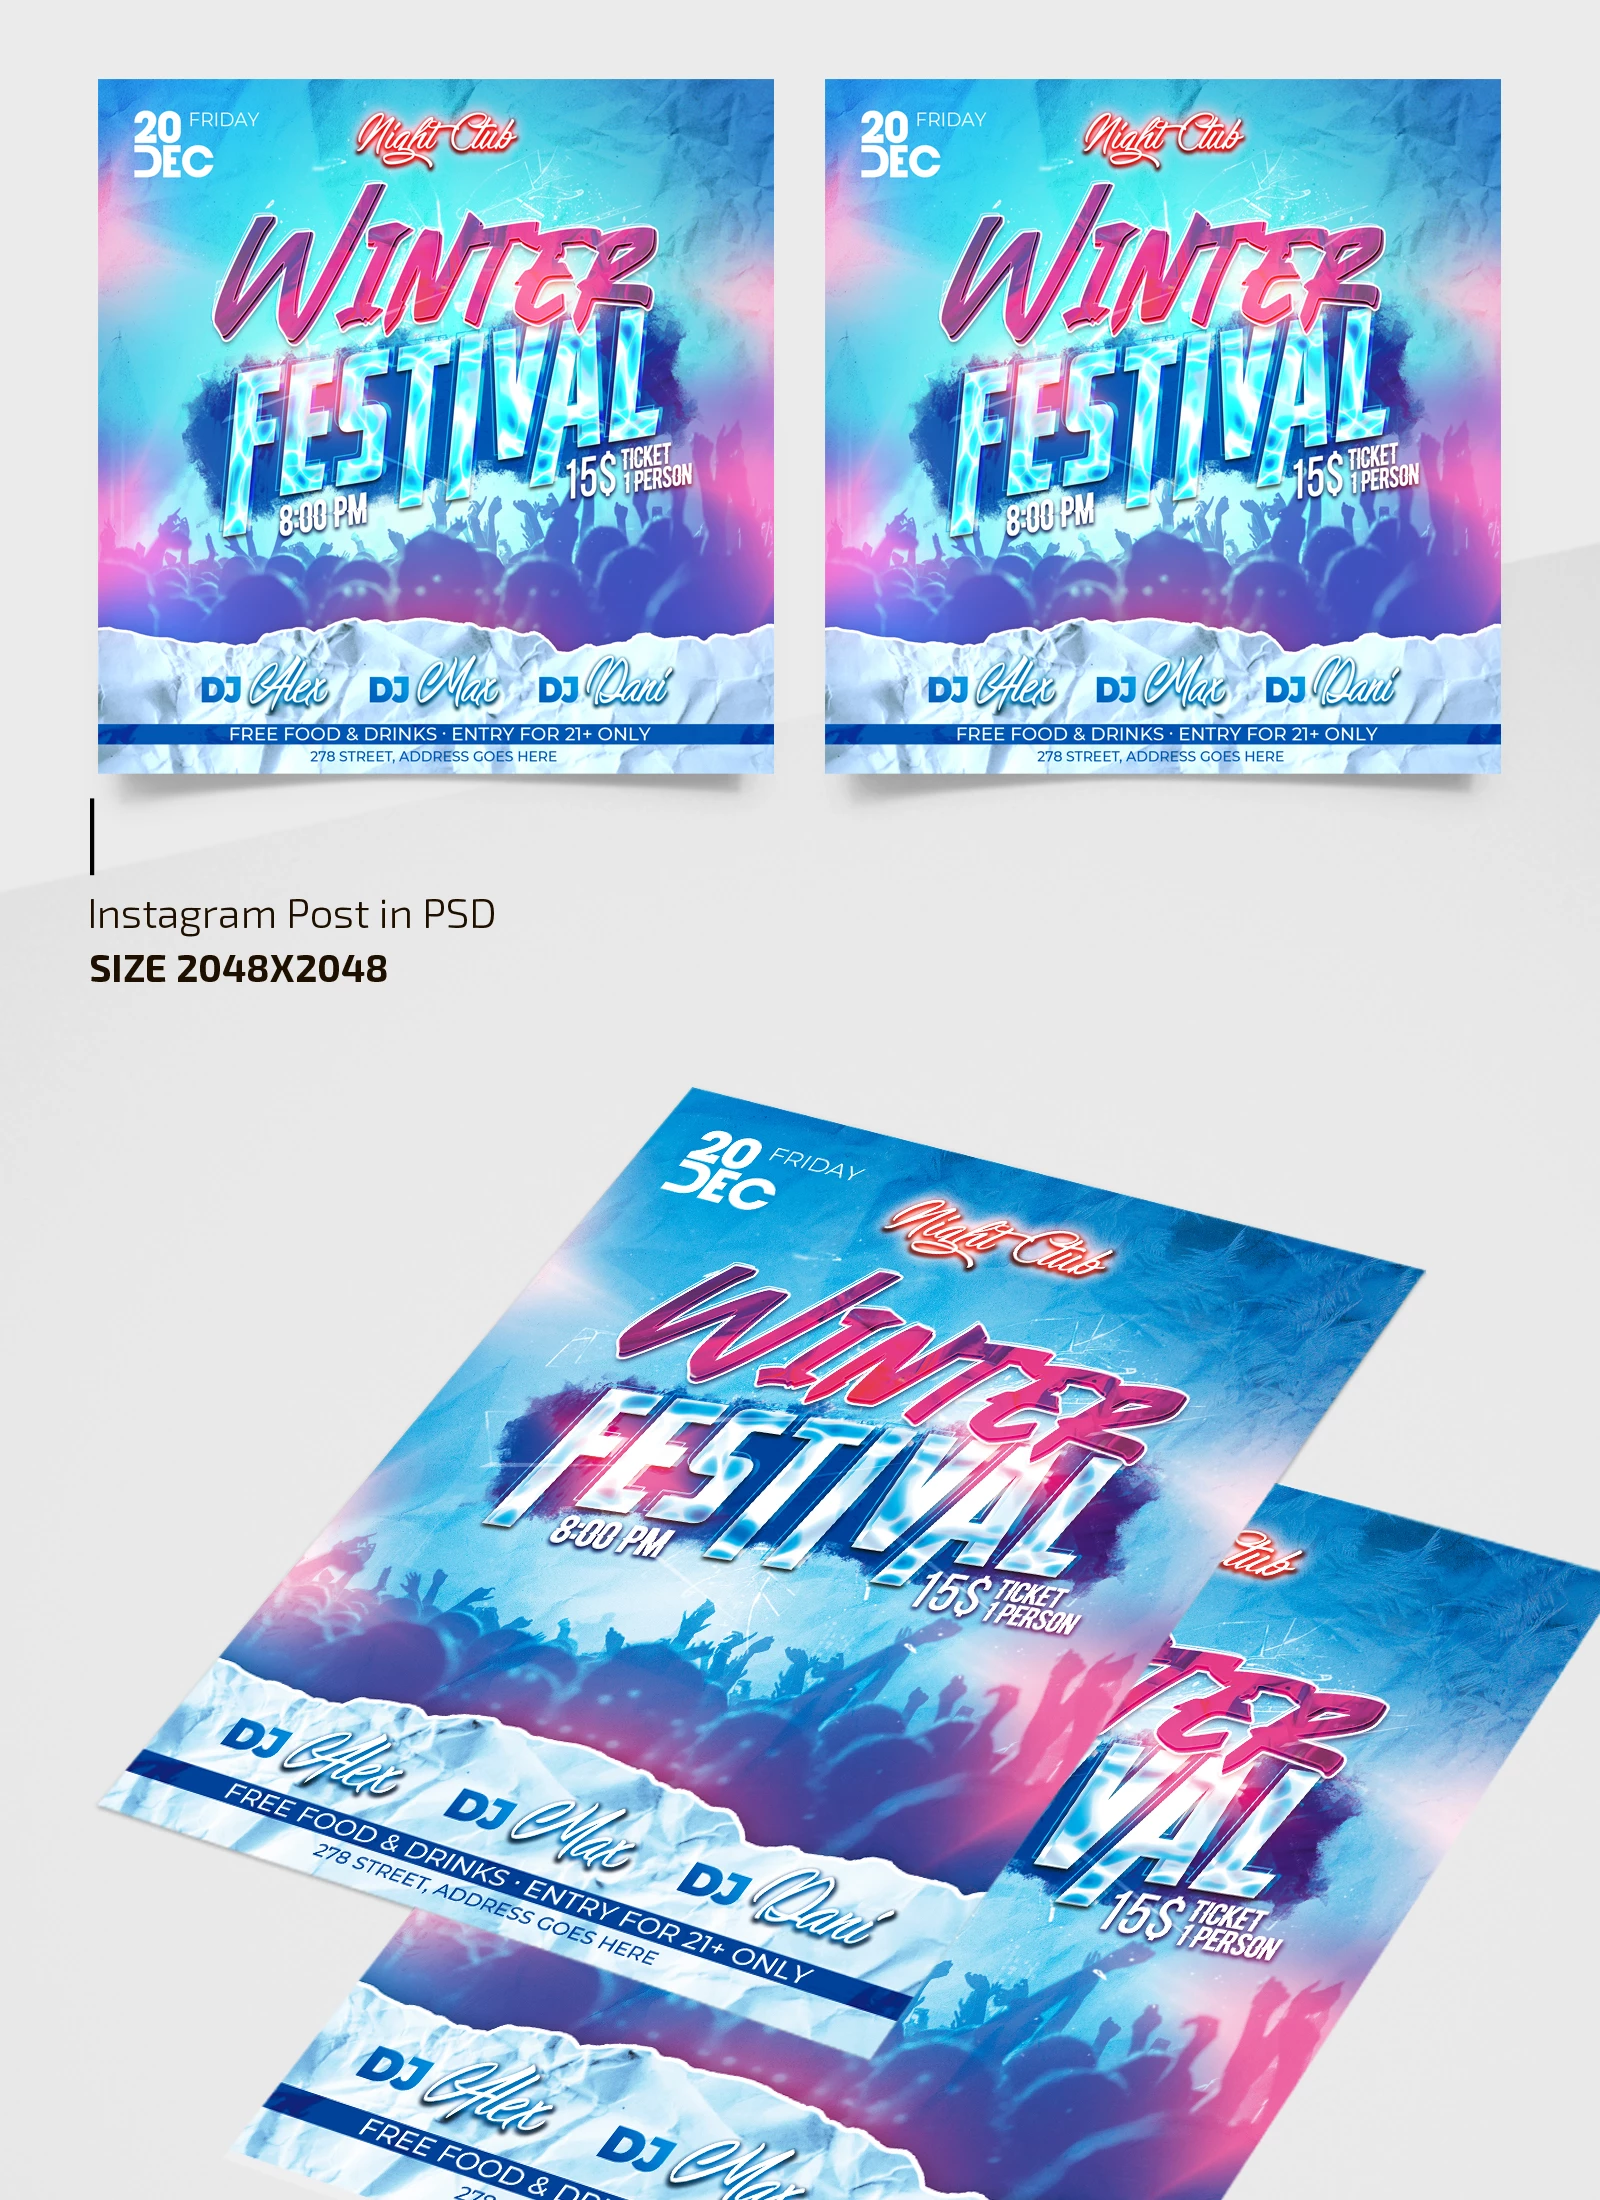 Free Winter Festival Flyer Template + Instagram Post (PSD)